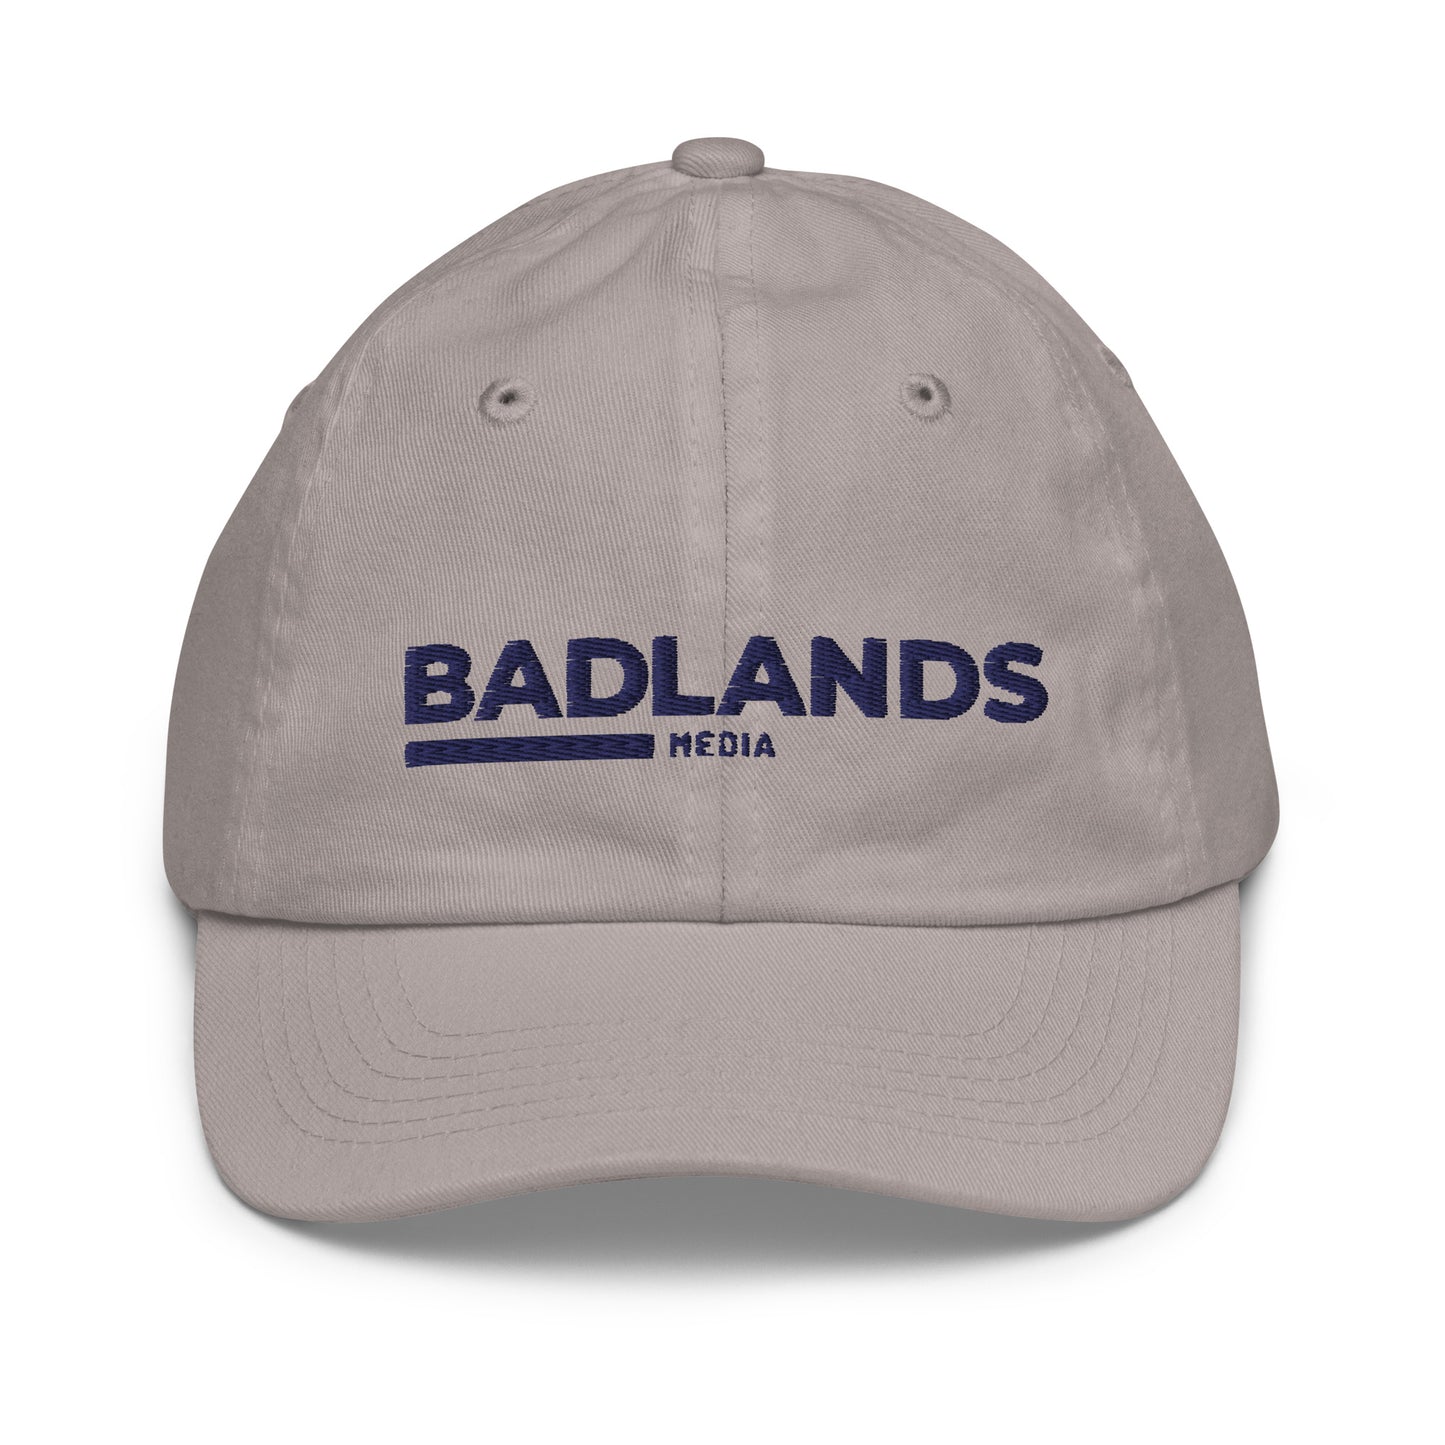 Badlands Kids Baseball Cap (blue logo)